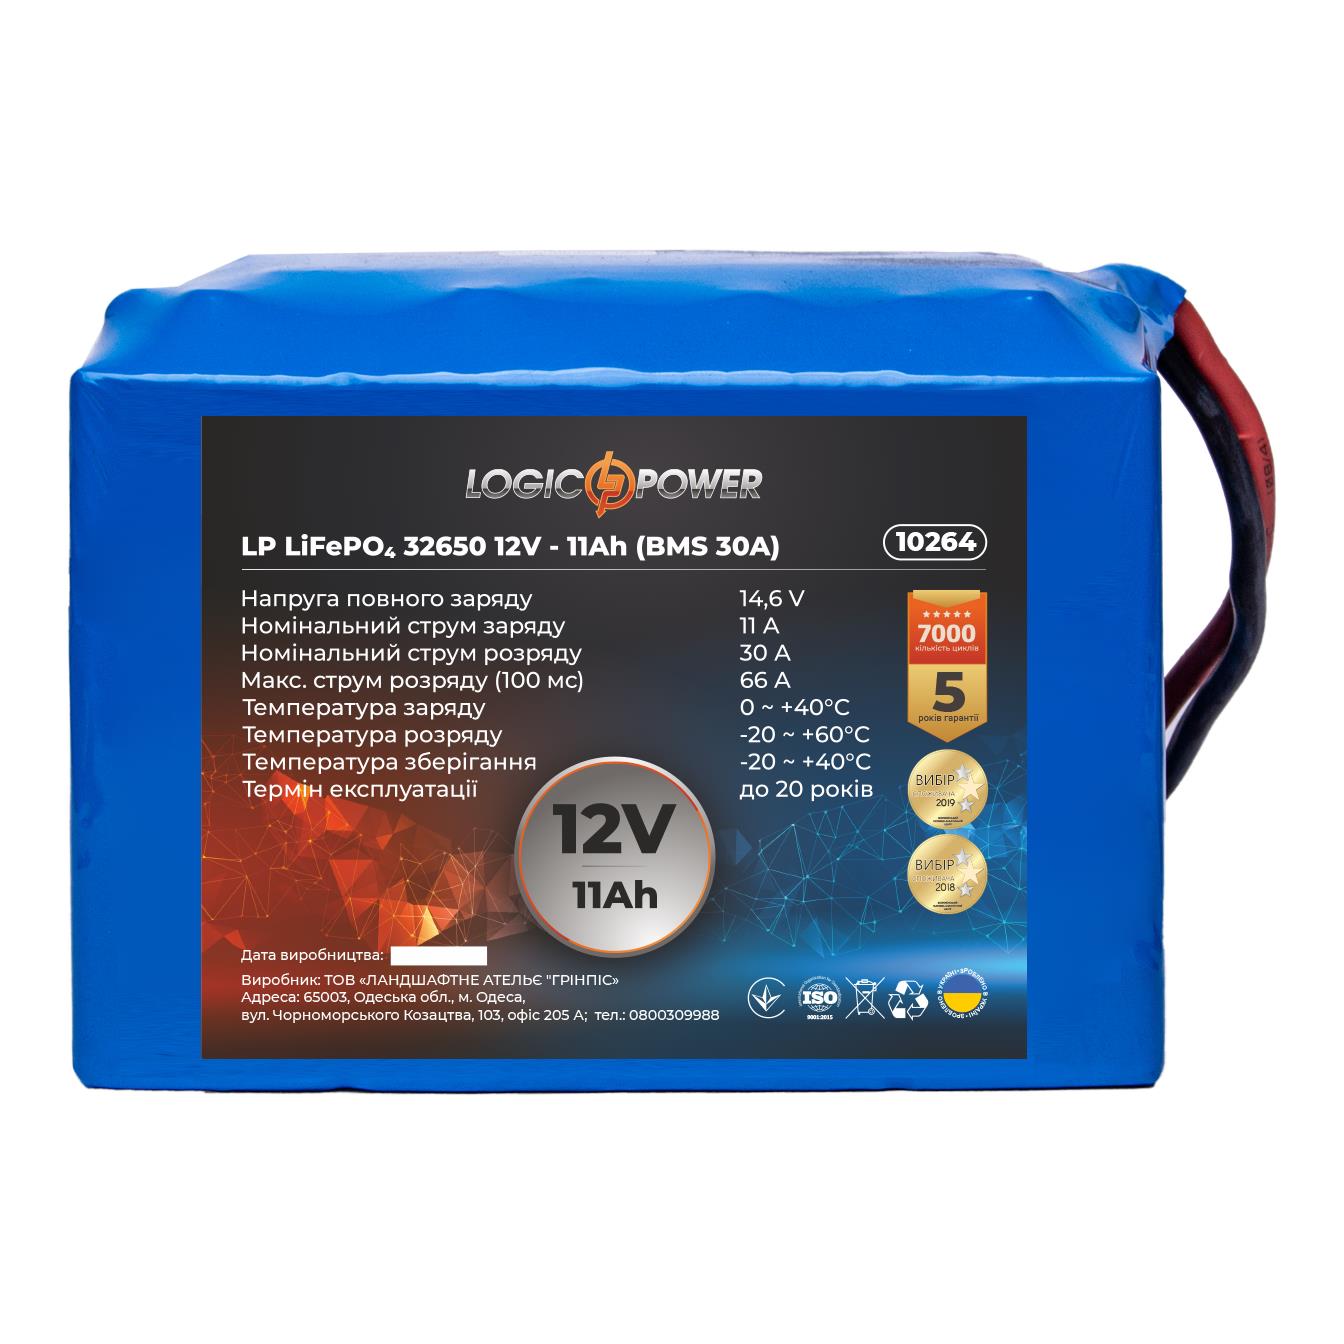 Цена аккумулятор литий-железо-фосфатный LogicPower LP LiFePO4 32650 12V - 11 Ah (BMS 30A) (10264) в Львове